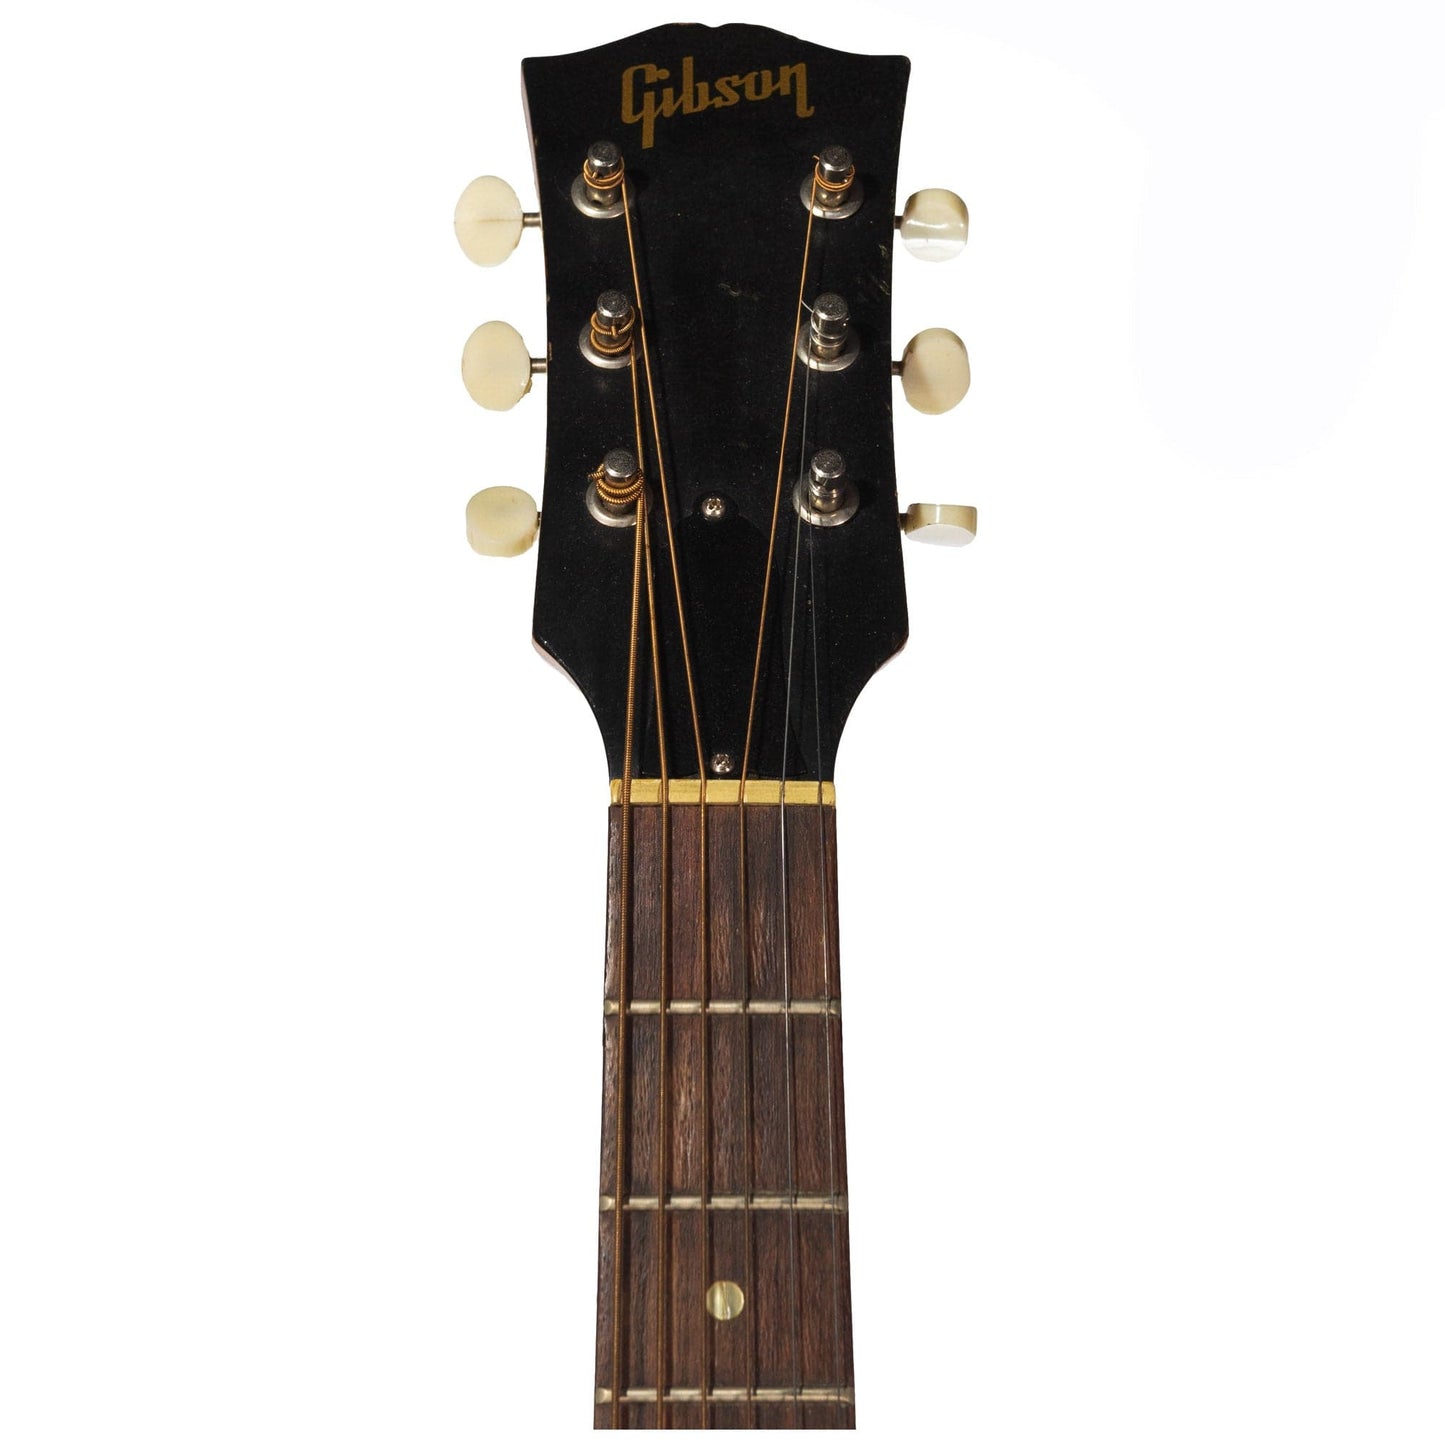 Vintage 1966 Gibson Acoustic Guitar Back